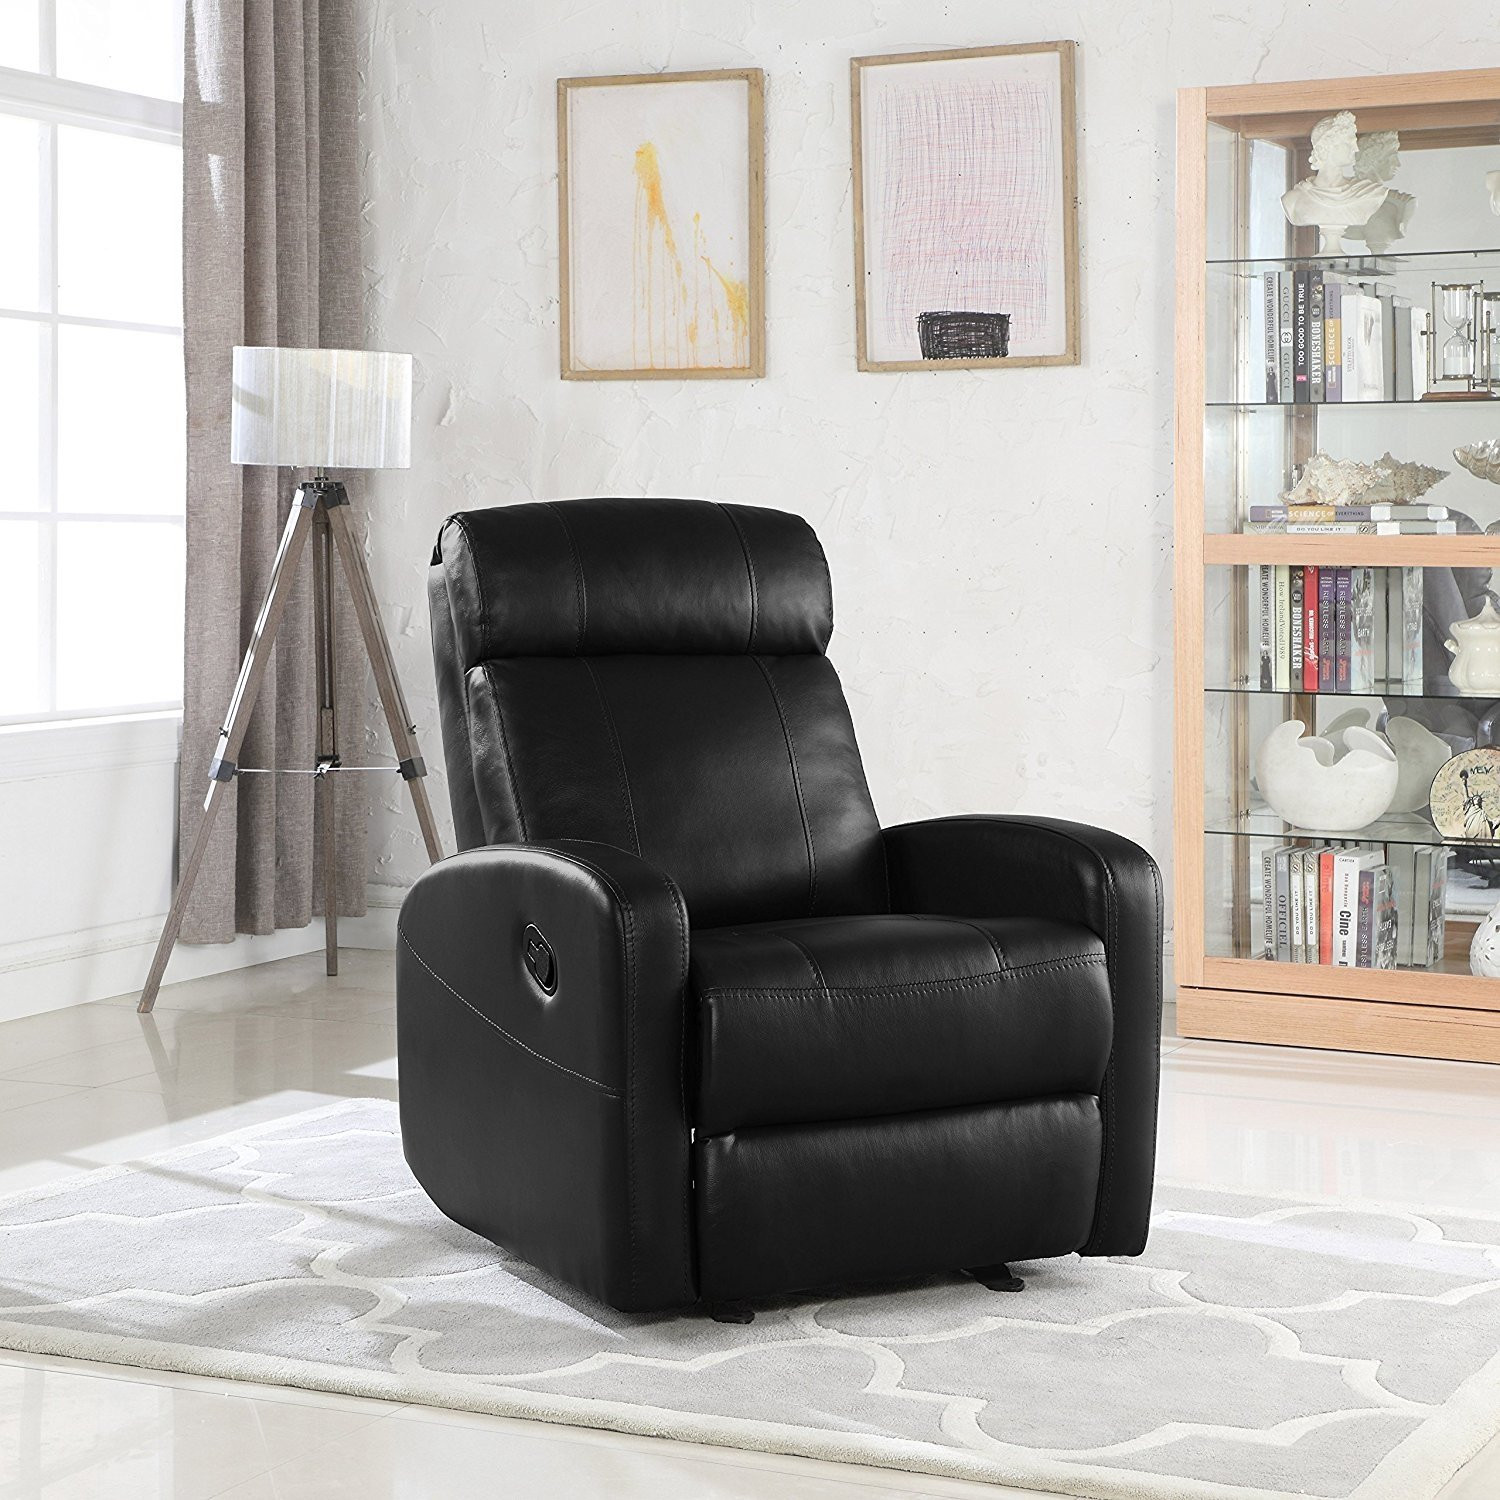 Walmart Living Room Chairs
 Overstuffed Sleek Modern Living Room Faux Leather Recliner